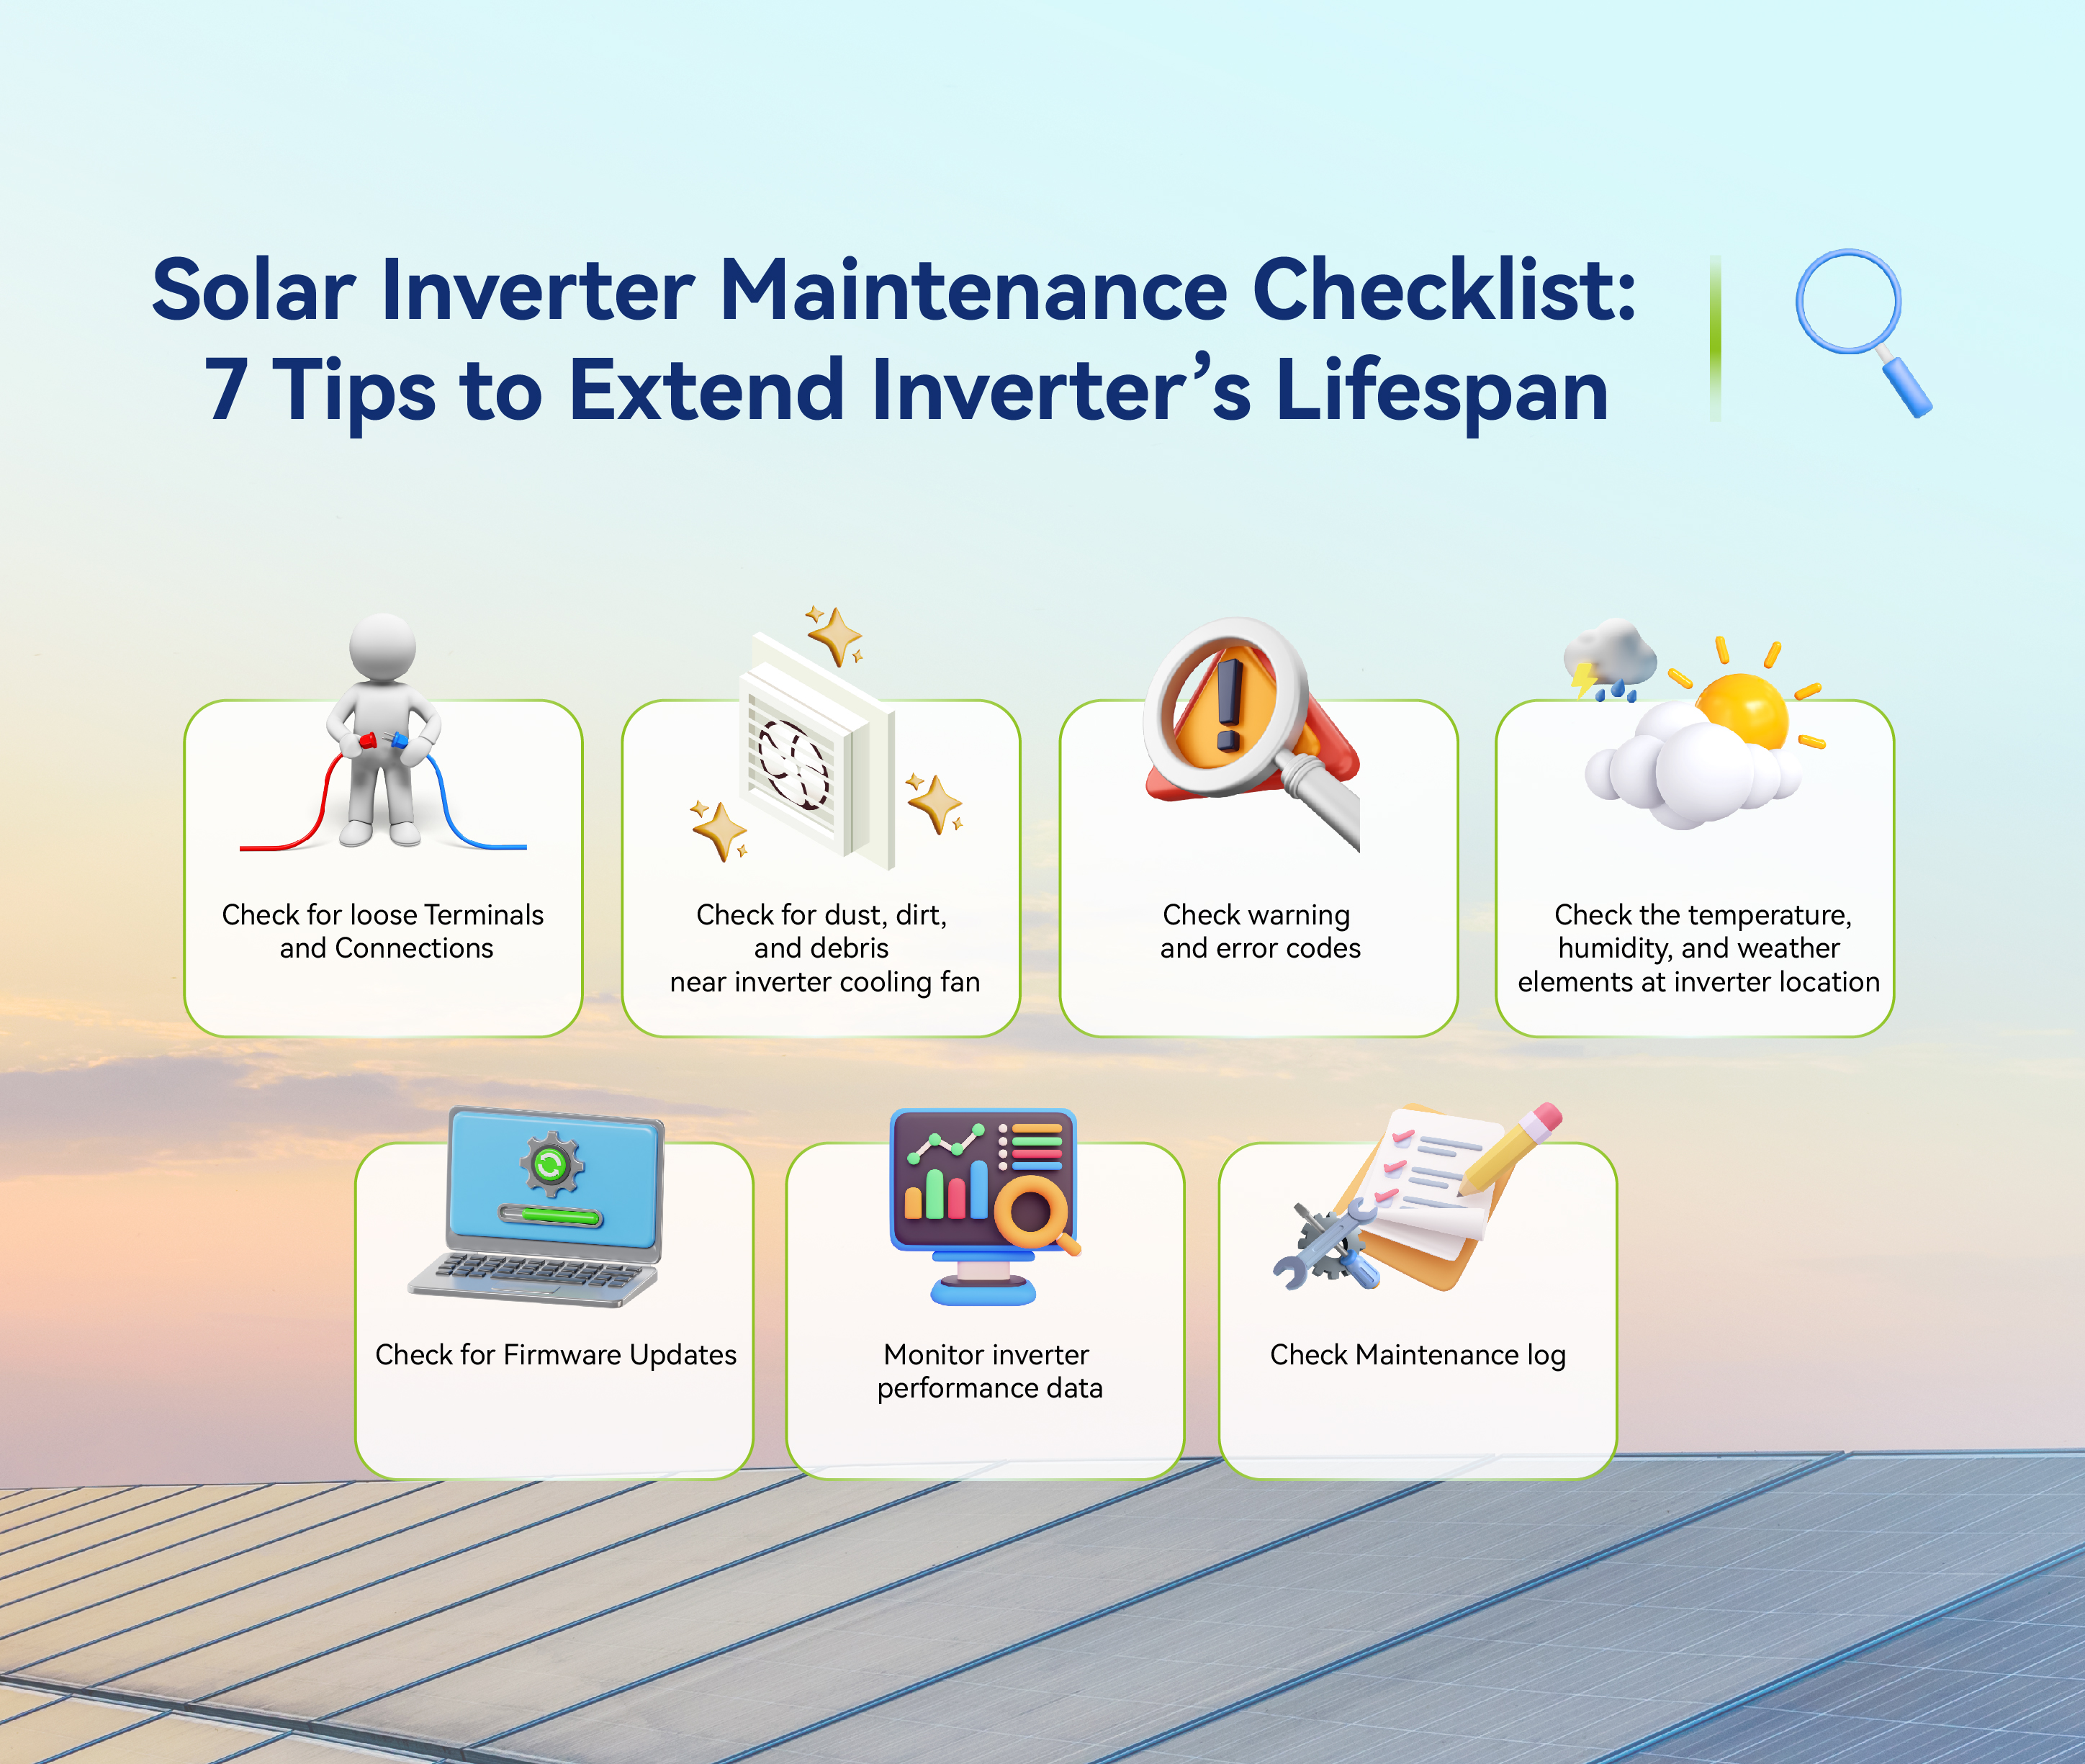 Solar Inverter Maintenance Checklist: 7 Tips to Extend Inverter's Lifespan